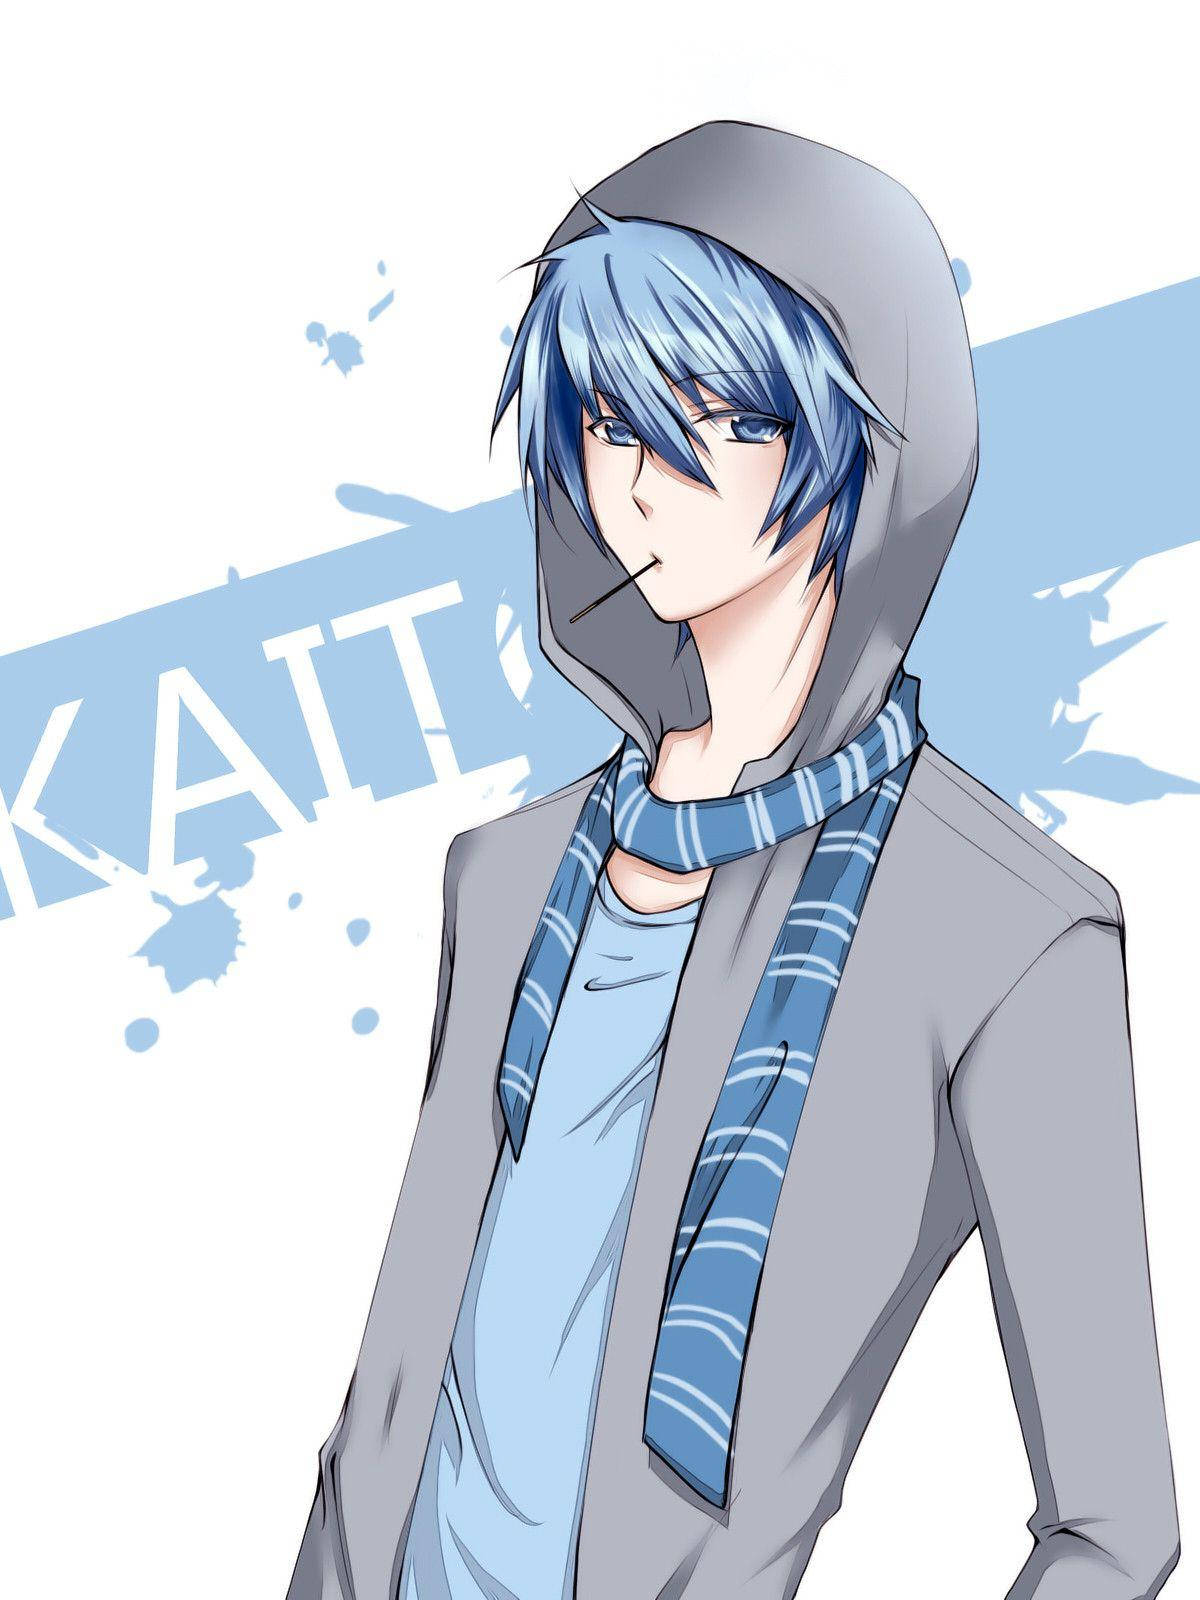 Handsome Anime Boy Kaito Shion Background